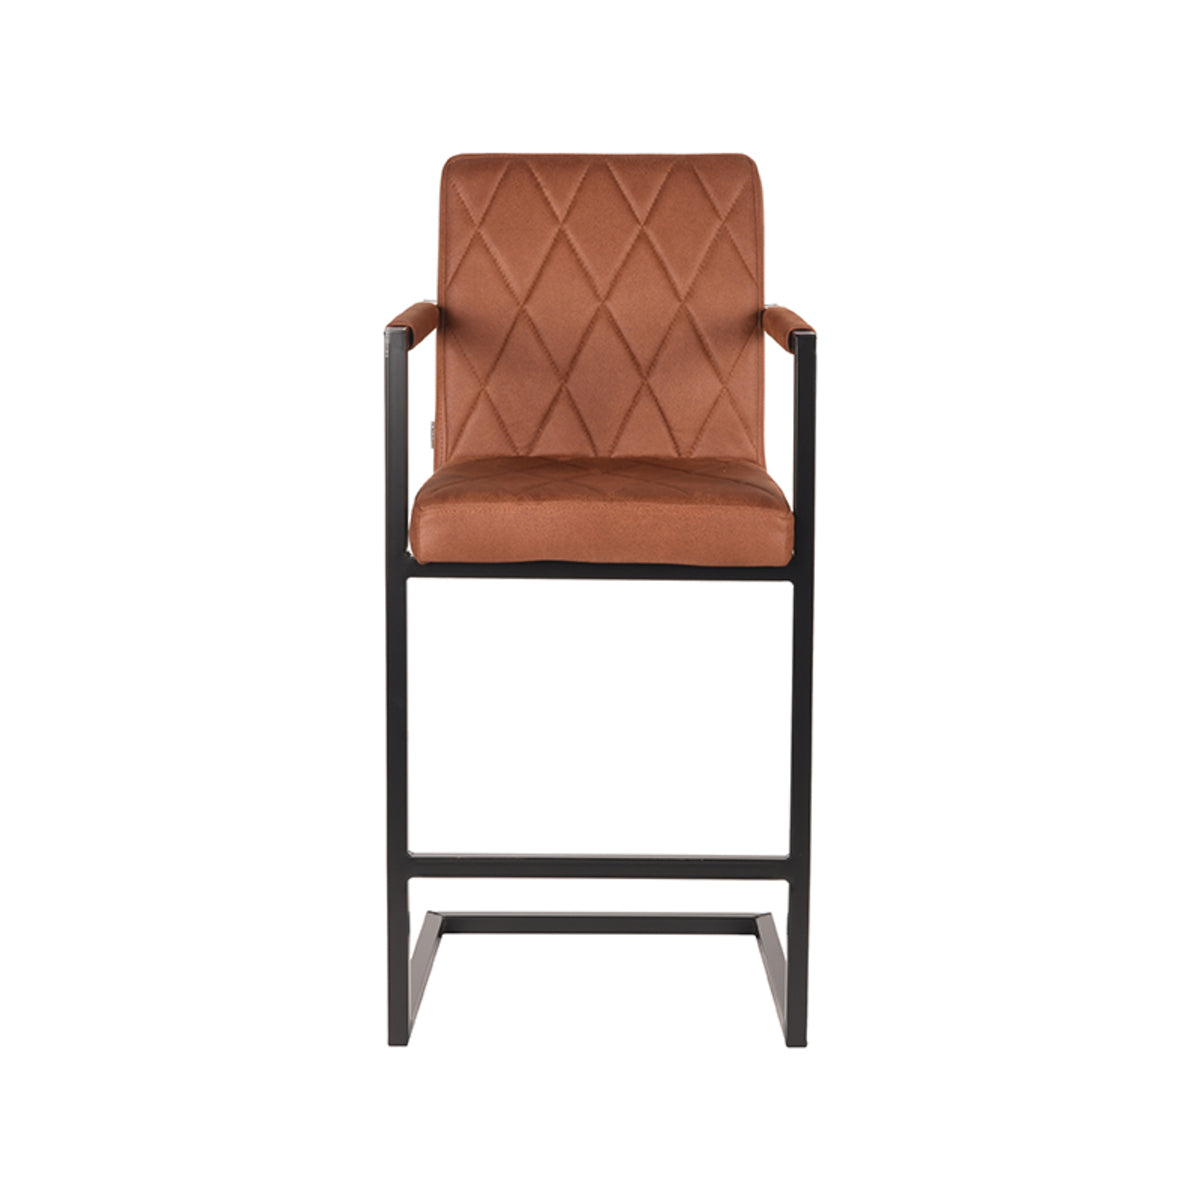 LABEL51 Bar stool Denmark - Cognac - Microfiber - Seat height 65